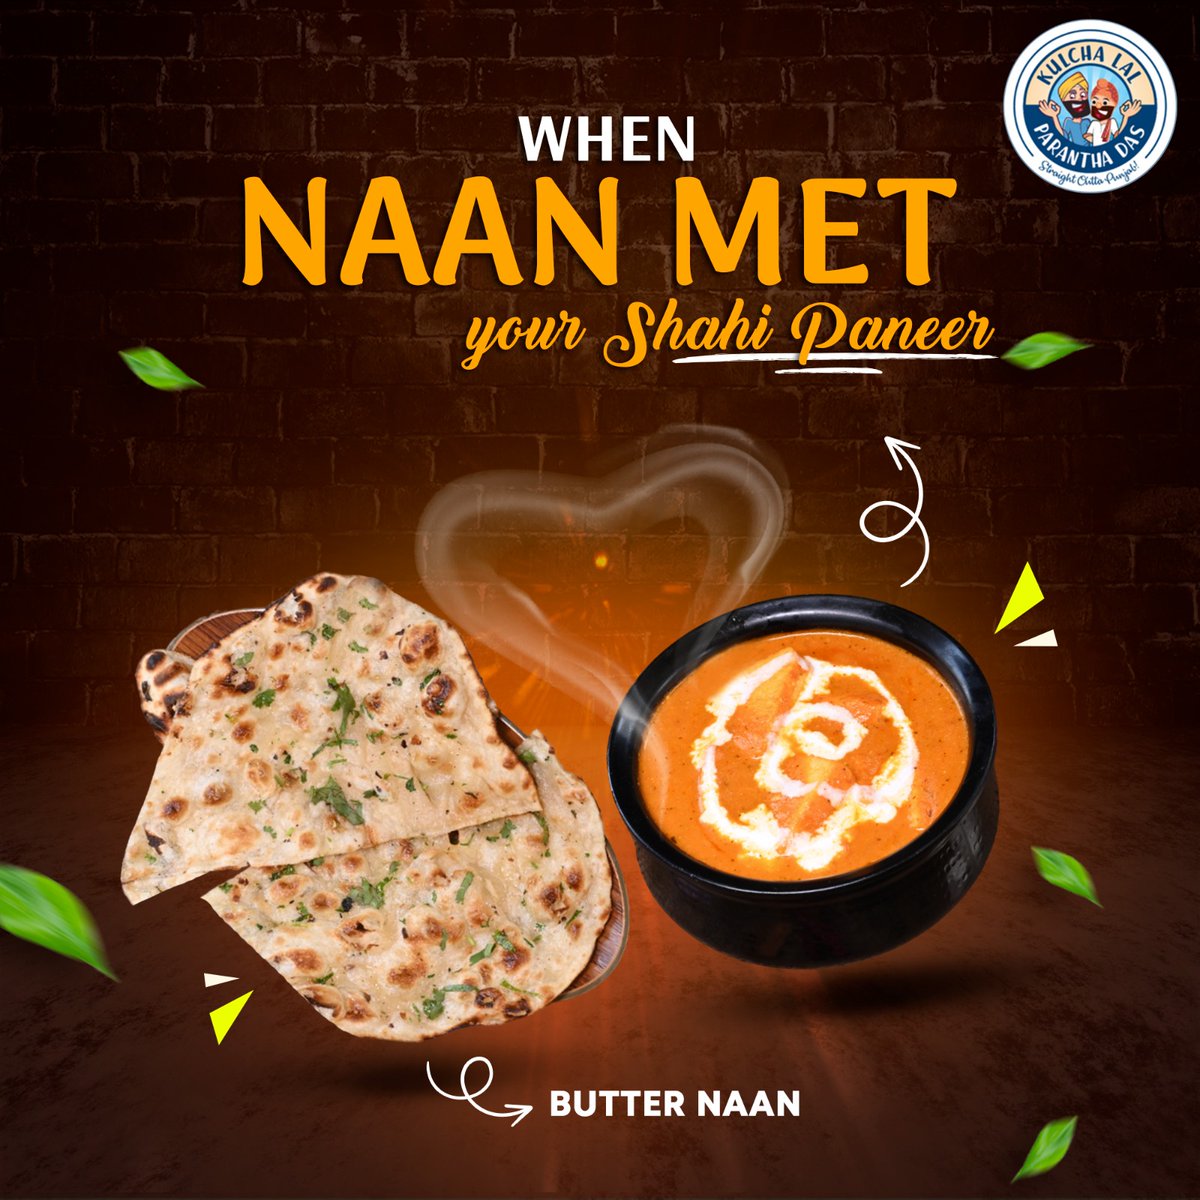 When Butter Naan Met Shahi Paneer: A Match Made in Culinary Heaven!

#KulchaLalParanthaDas #KLPD #ButterNaan #ShahiPaneer #Gurgaon #AuthenticPunjabiFood #BestKulcha #BestParantha #NorthIndianFood #PunjabiFood #BestIndianRestaurant #TagYourFriends